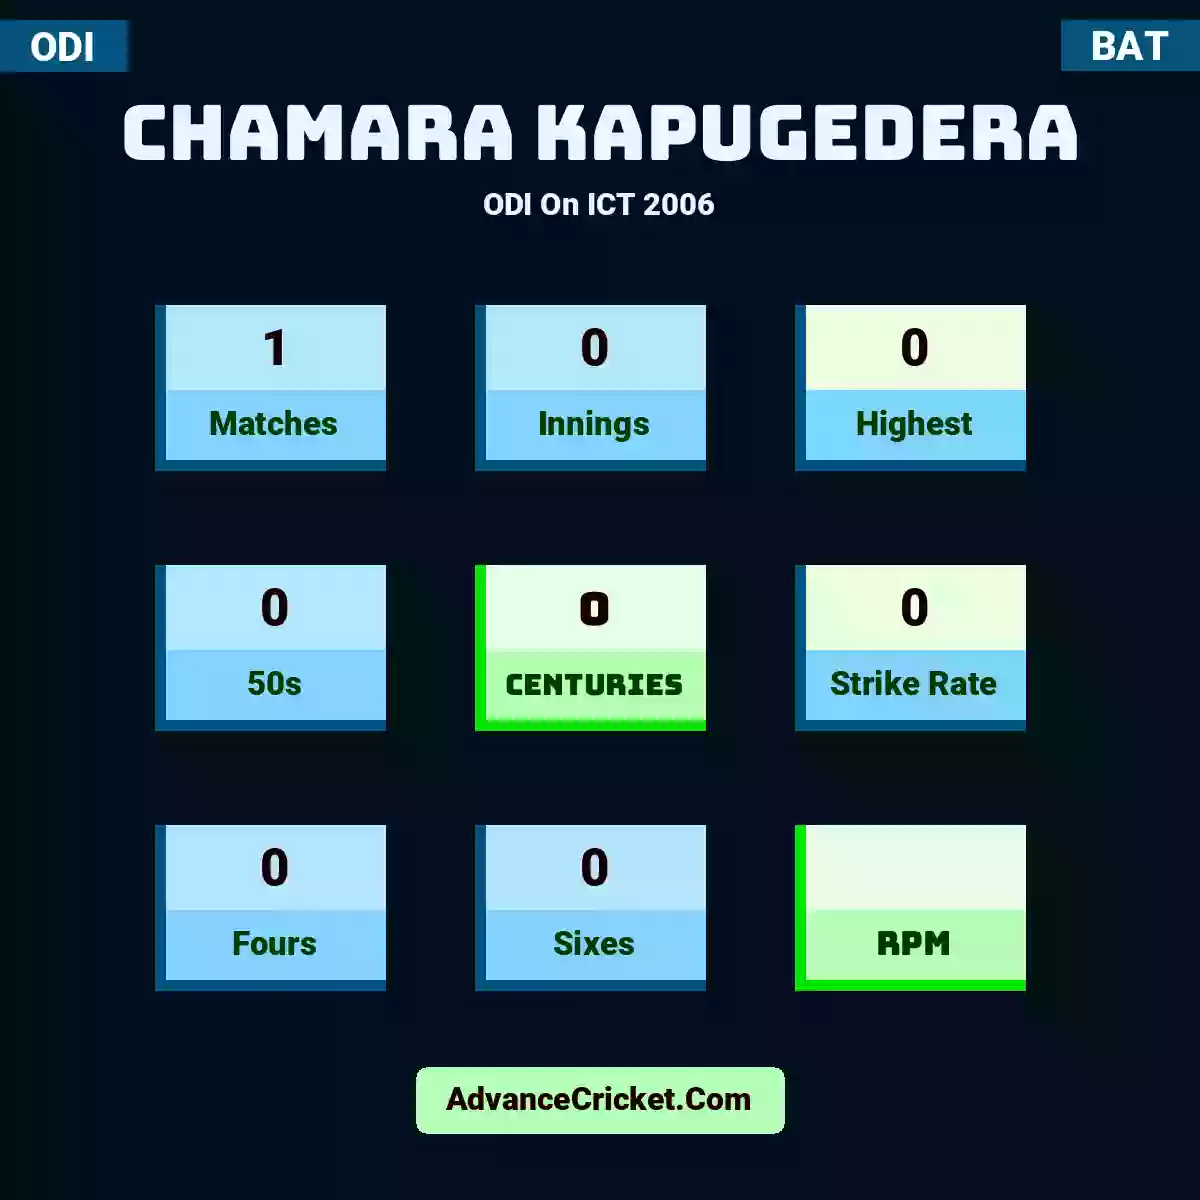 Chamara Kapugedera ODI  On ICT 2006, Chamara Kapugedera played 1 matches, scored 0 runs as highest, 0 half-centuries, and 0 centuries, with a strike rate of 0. C.Kapugedera hit 0 fours and 0 sixes.